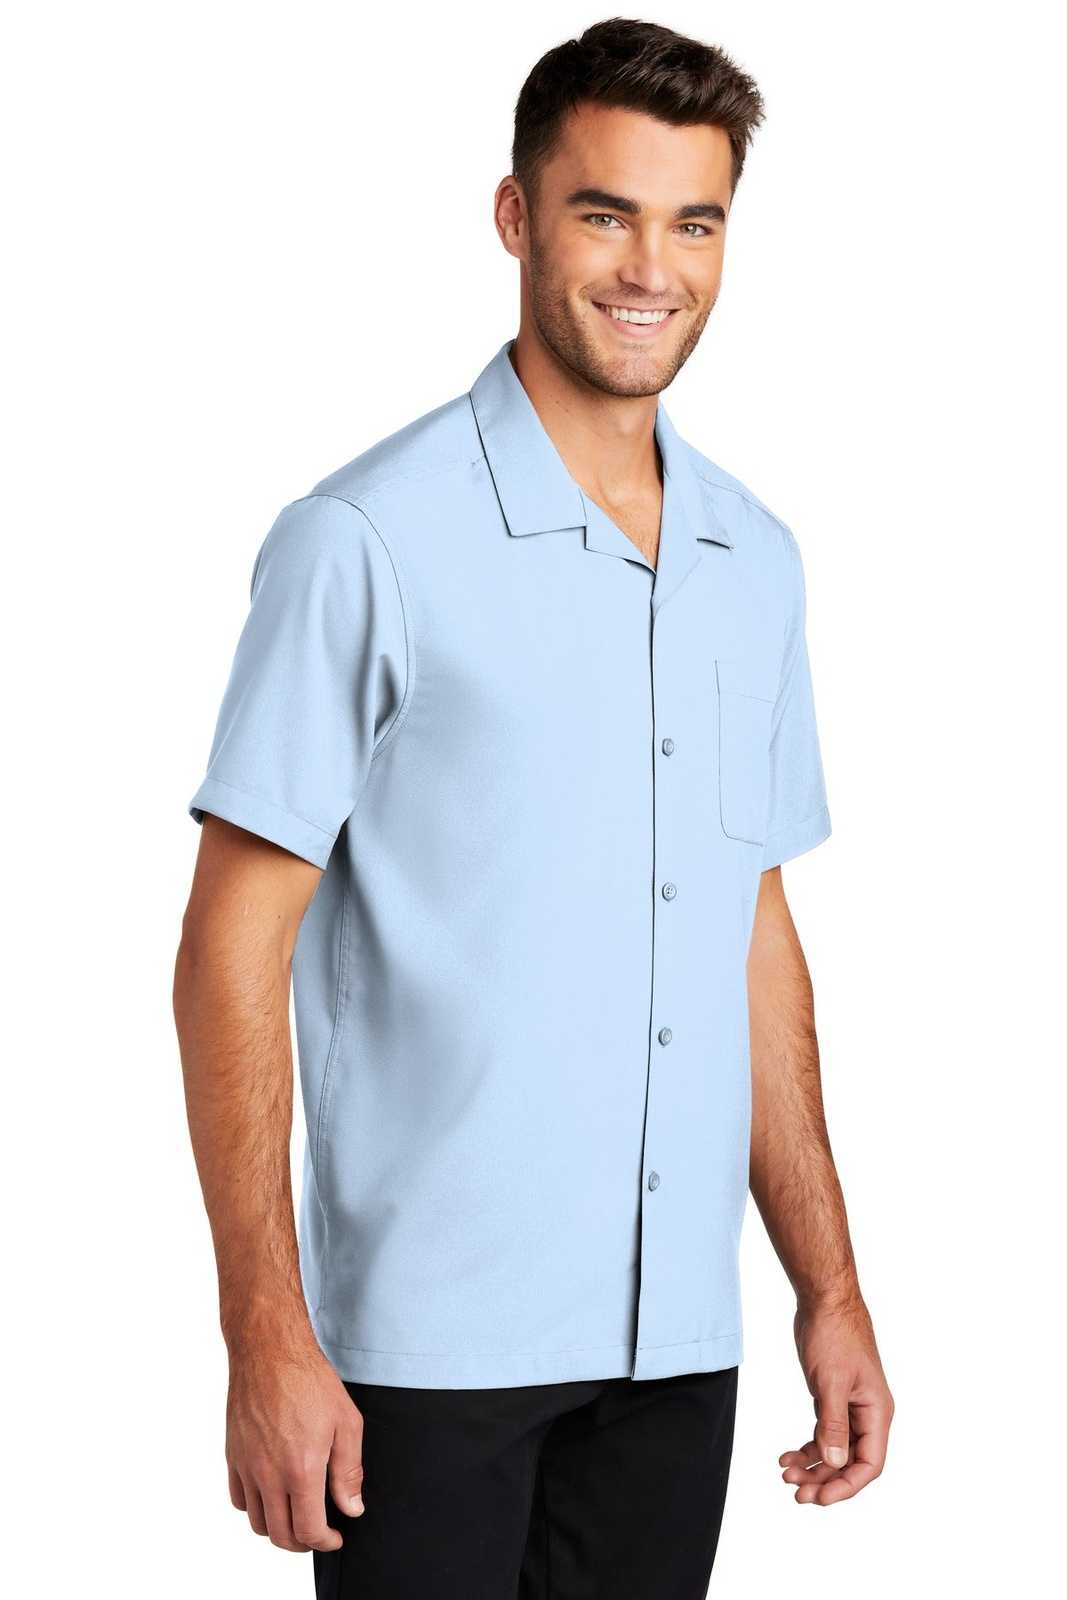 Port Authority W400 Short Sleeve Performance Staff Shirt - Cloud Blue - HIT a Double - 4